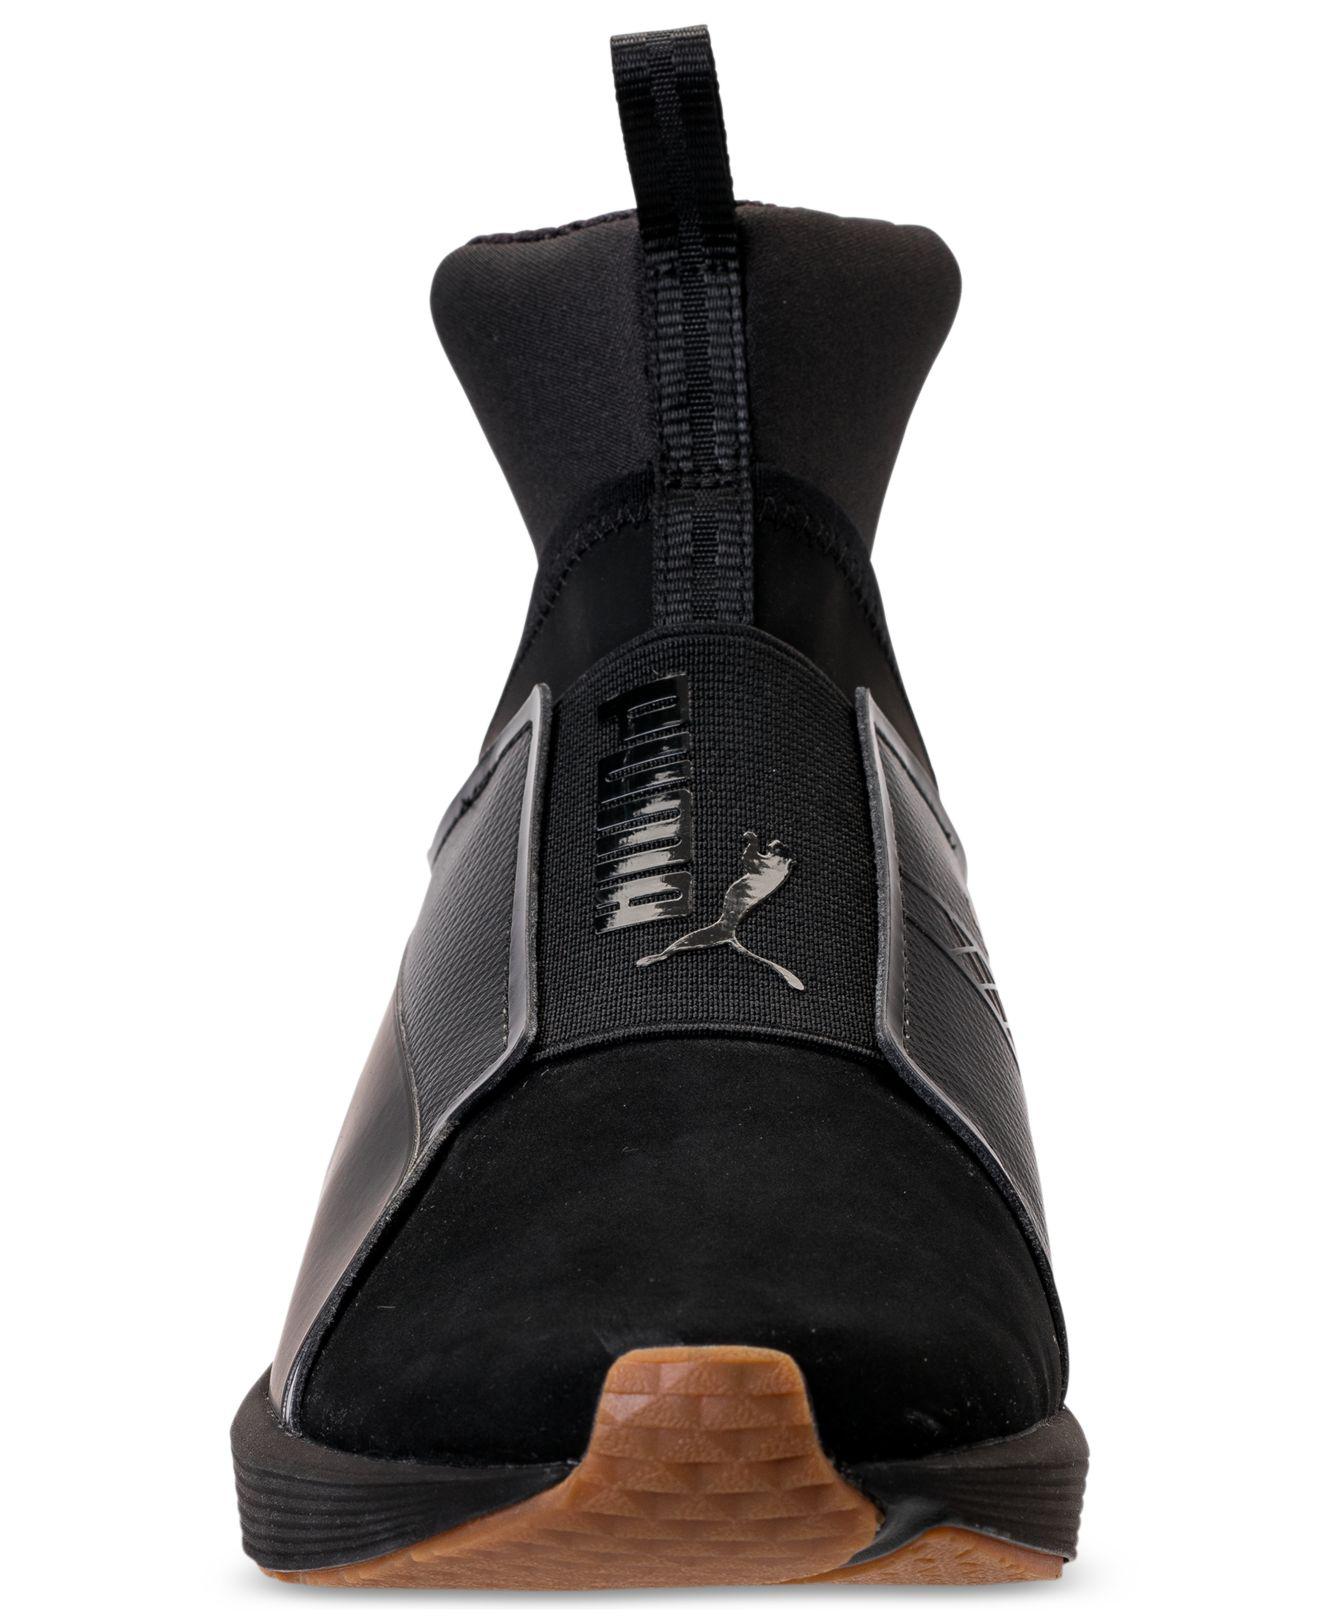 puma women's fierce nubuck naturals casual sneakers from finish line